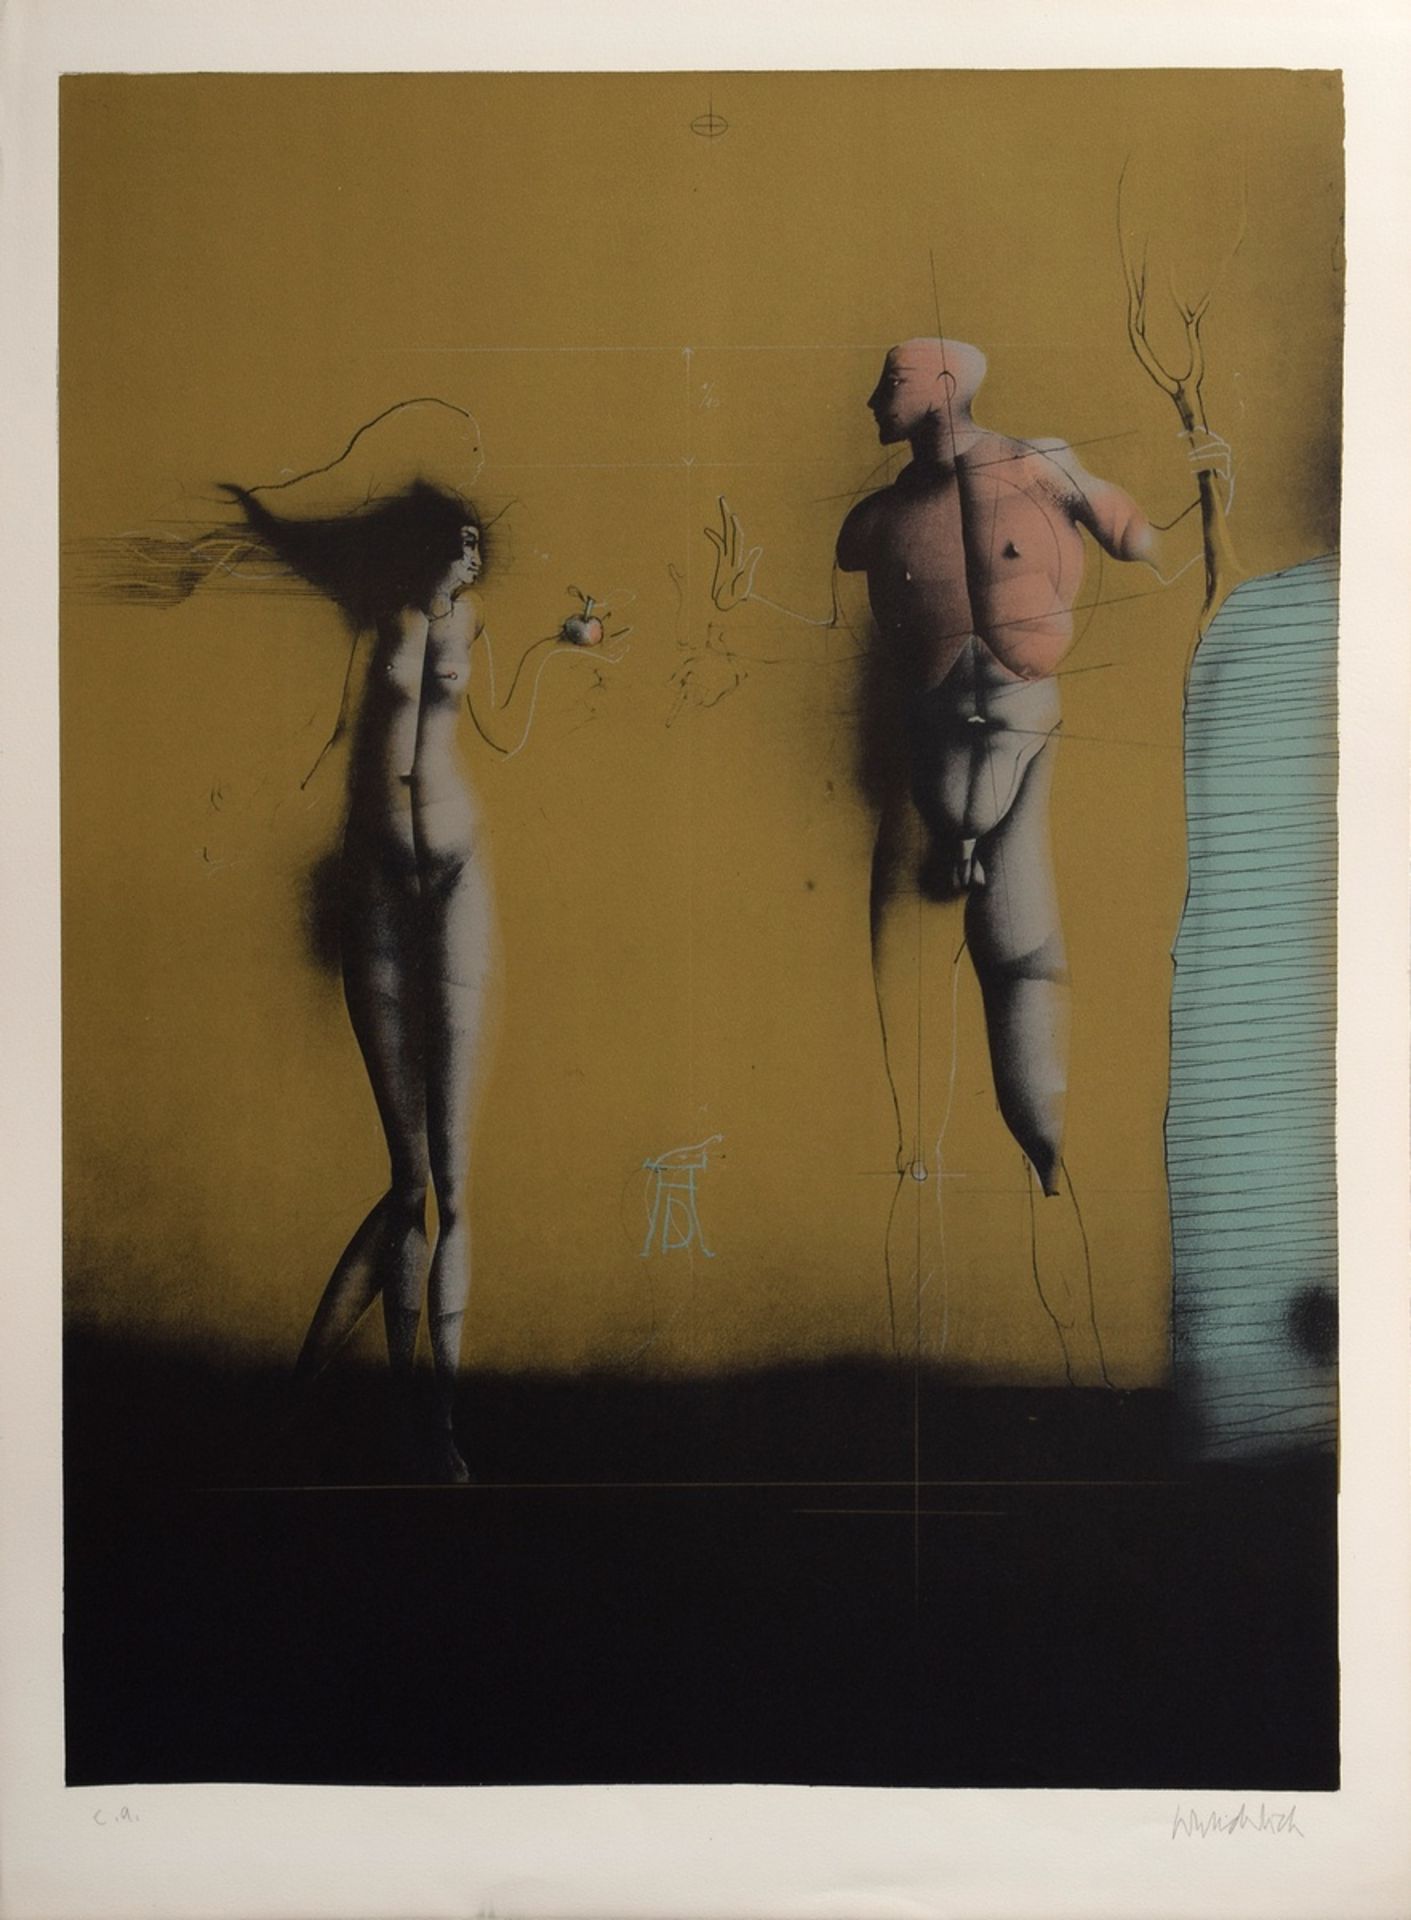 Wunderlich, Paul (1927-2010) "Adam and Eve" 1970, colour lithograph, e.a., b. num./sign., PM 75,5x5